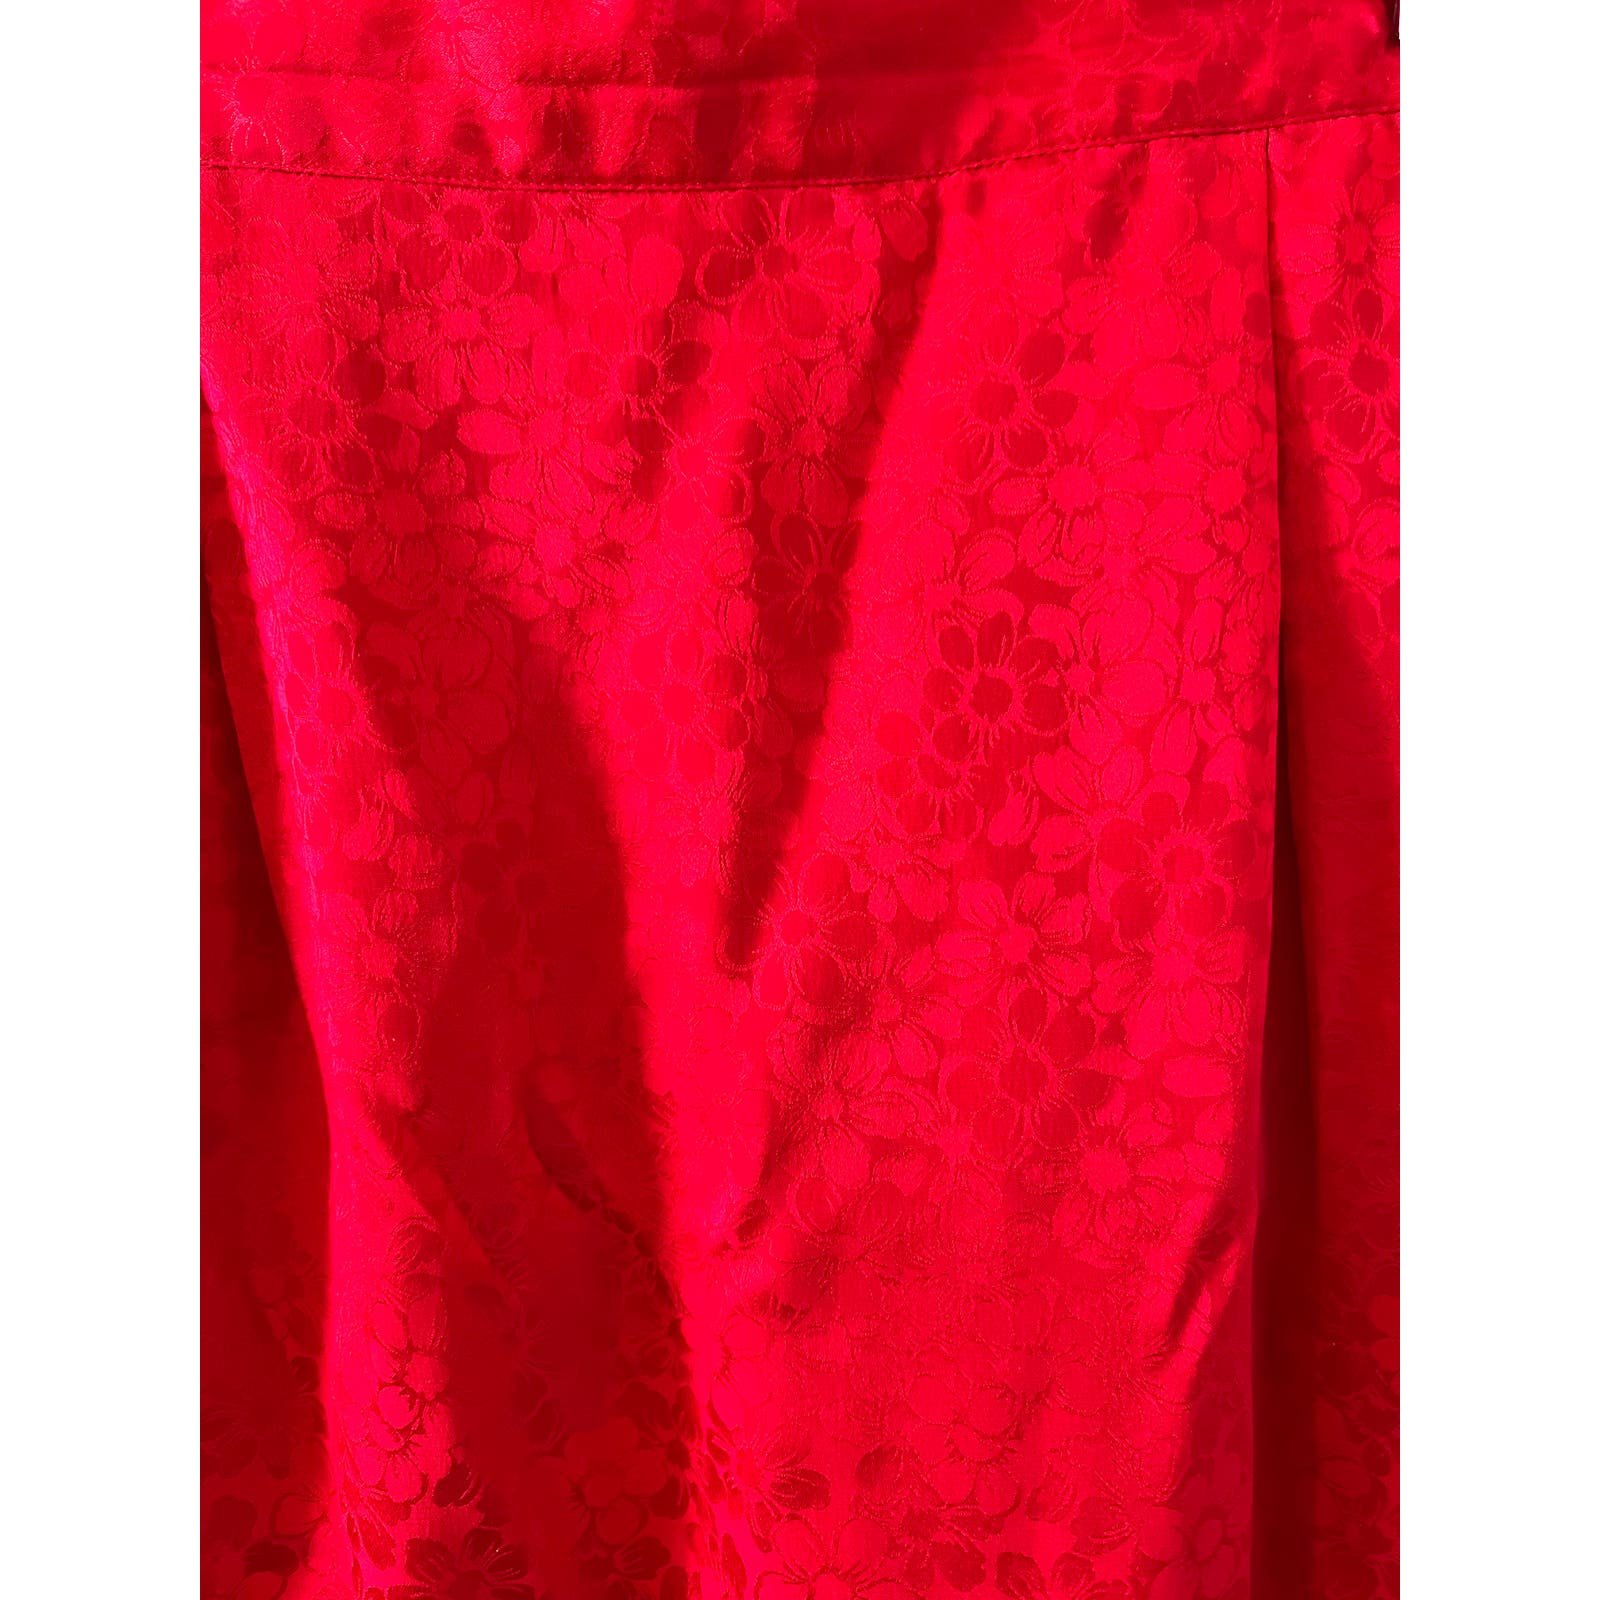 Buy Vintage silk midi skirt cherry red 6 J2sKfbdgW just buy it